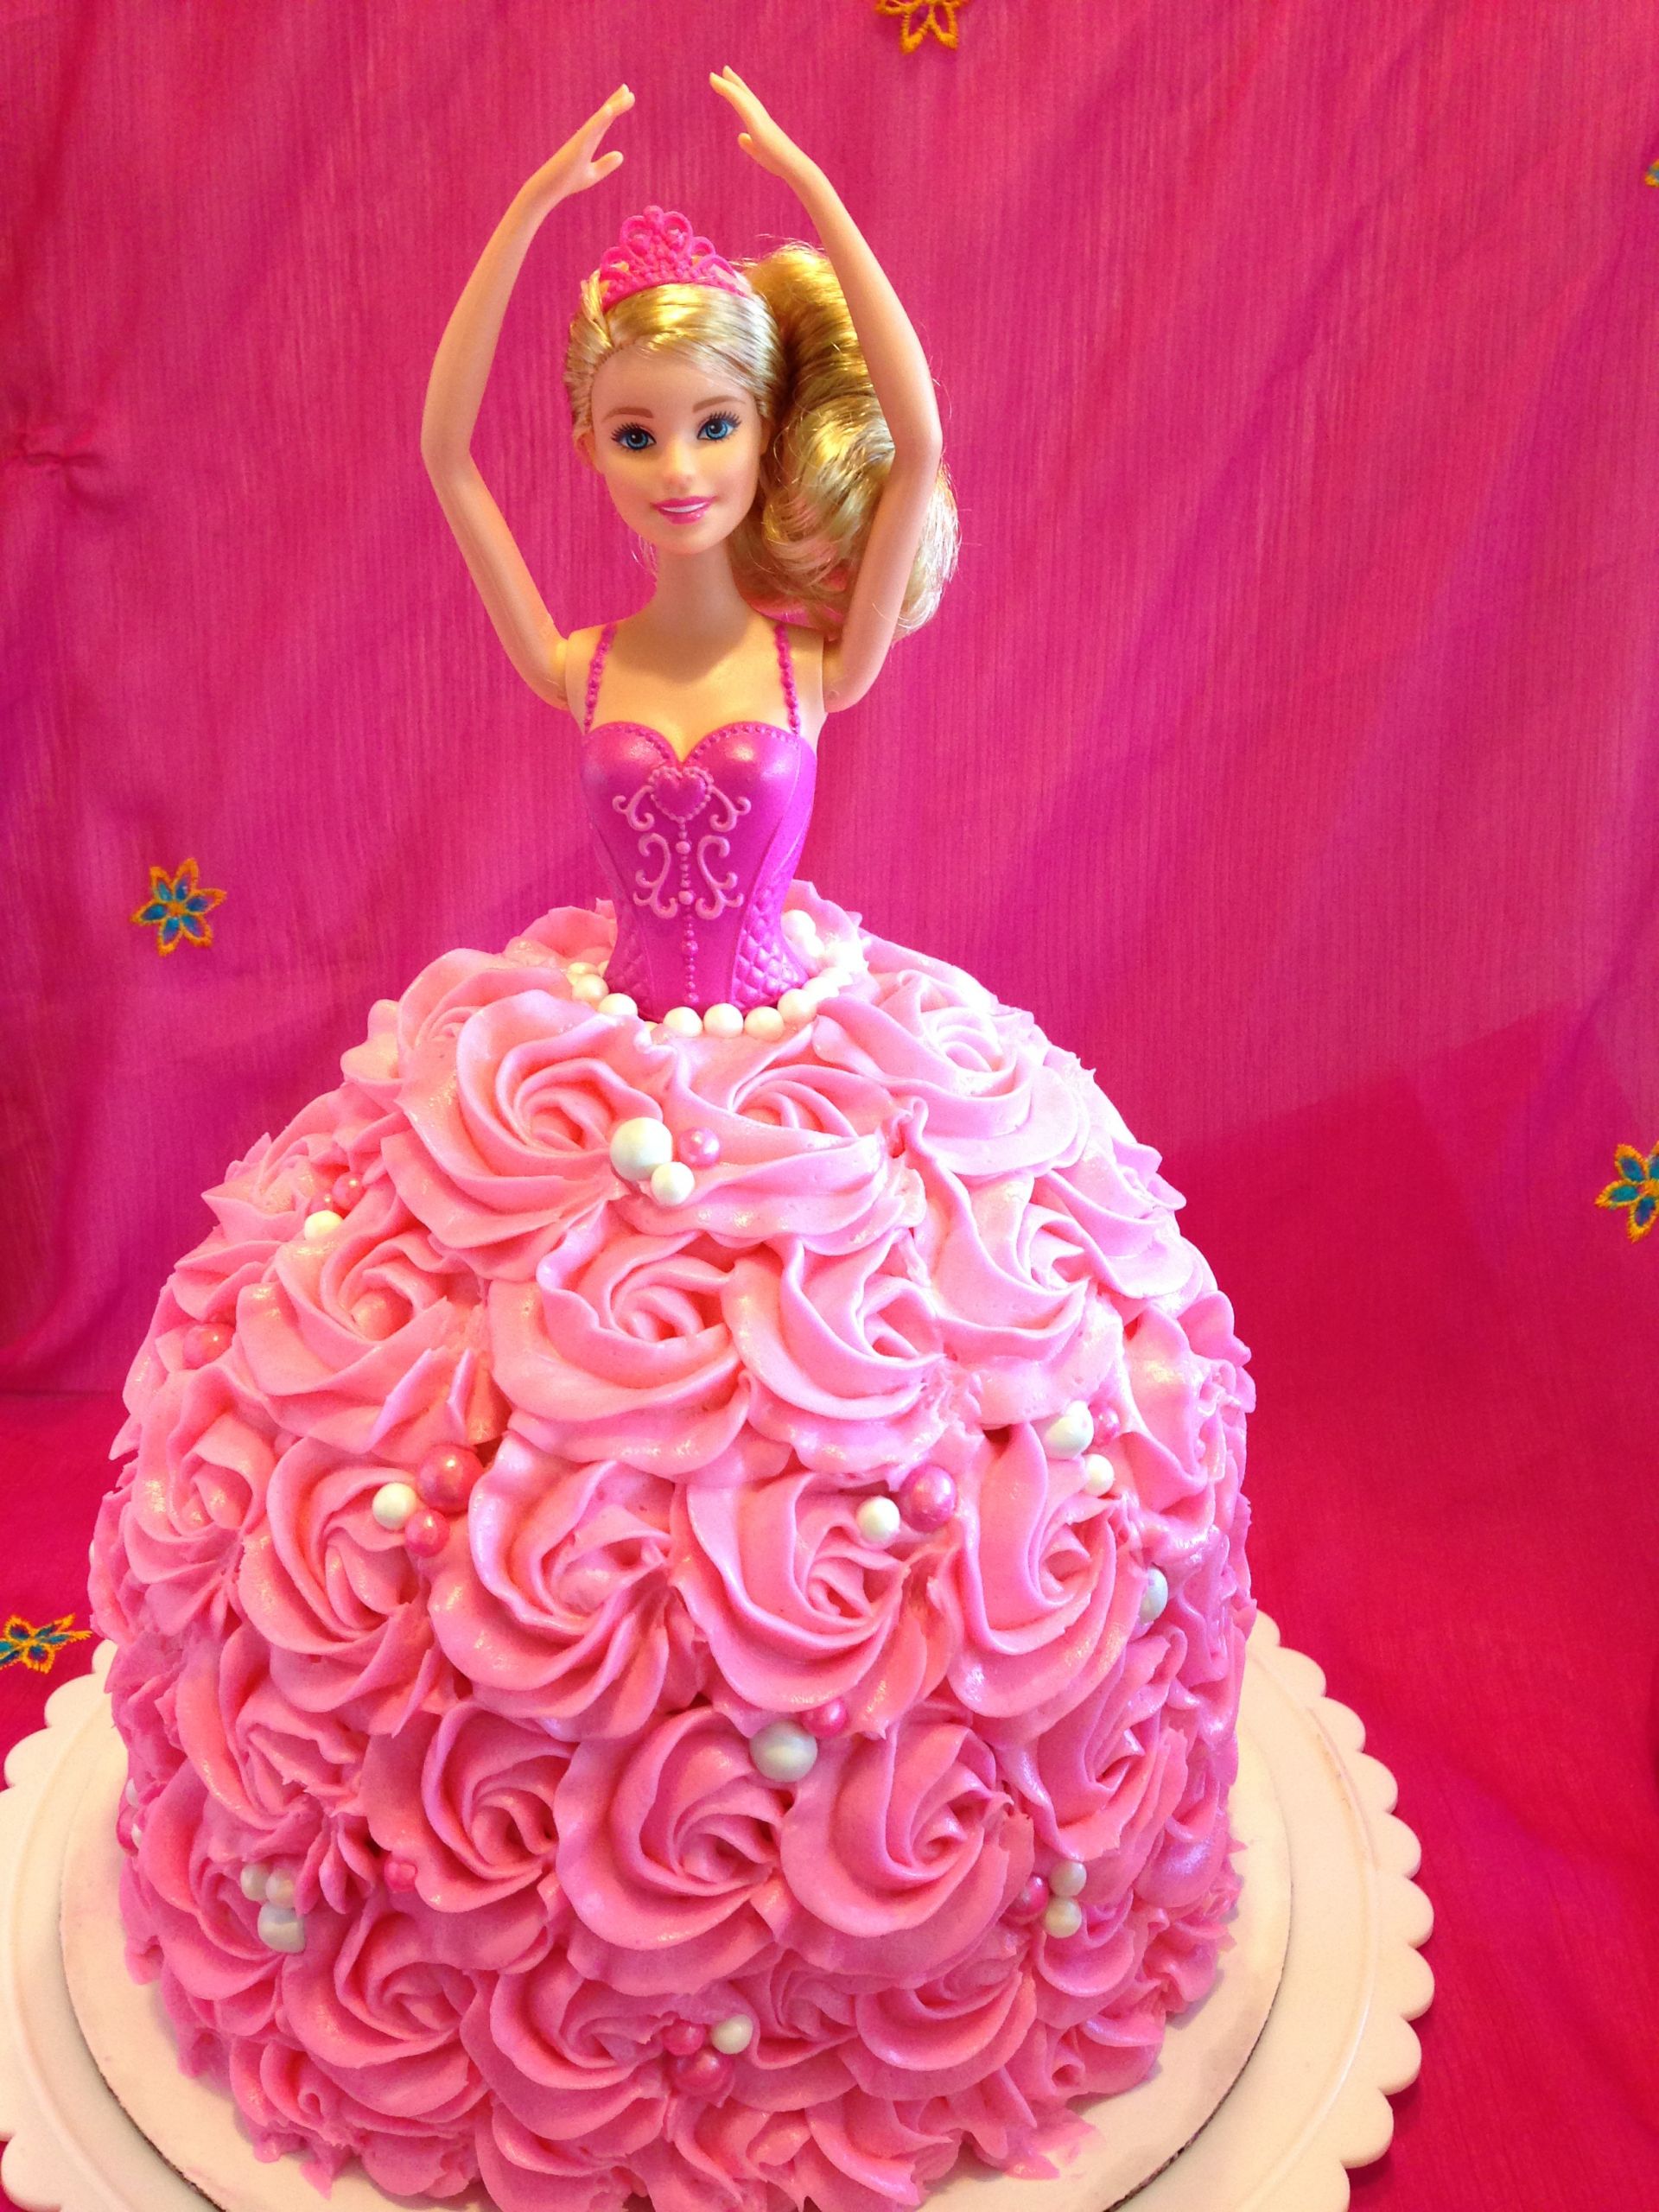 Barbie Birthday Cakes
 Barbie Cake How To